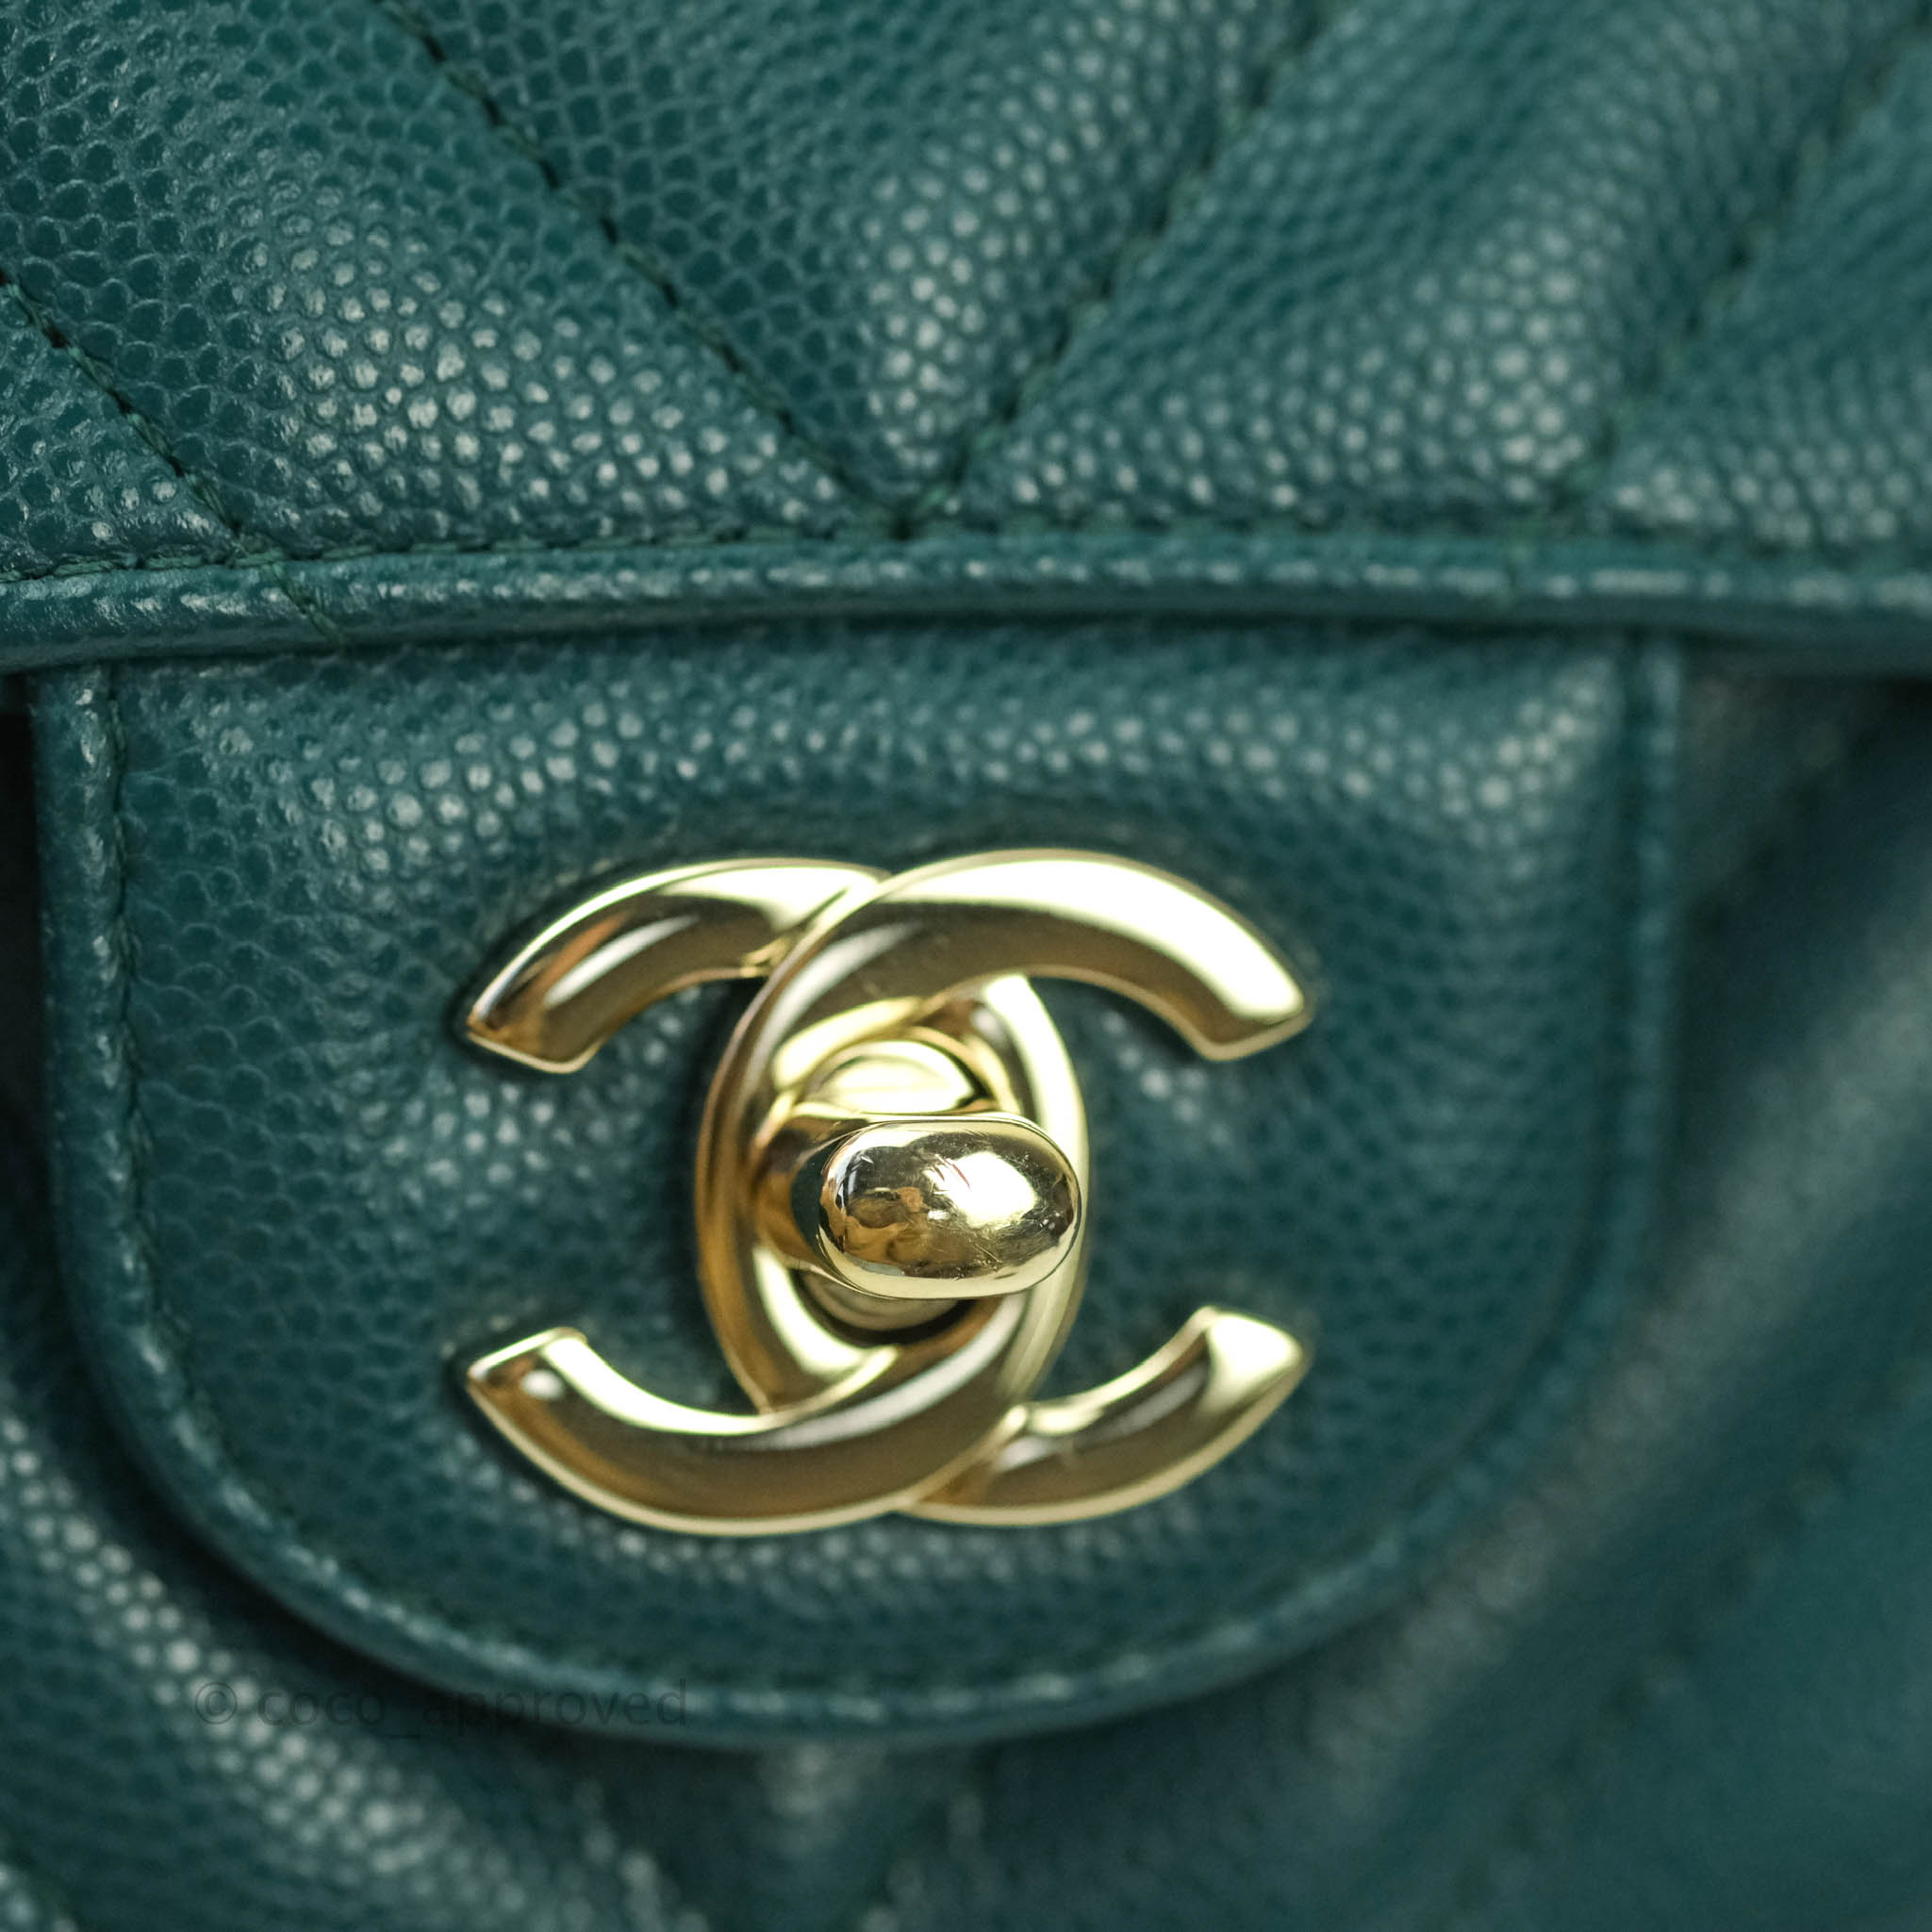 Chanel Chevron Mini Rectangular Caviar Flap Bag Dark Green Gold